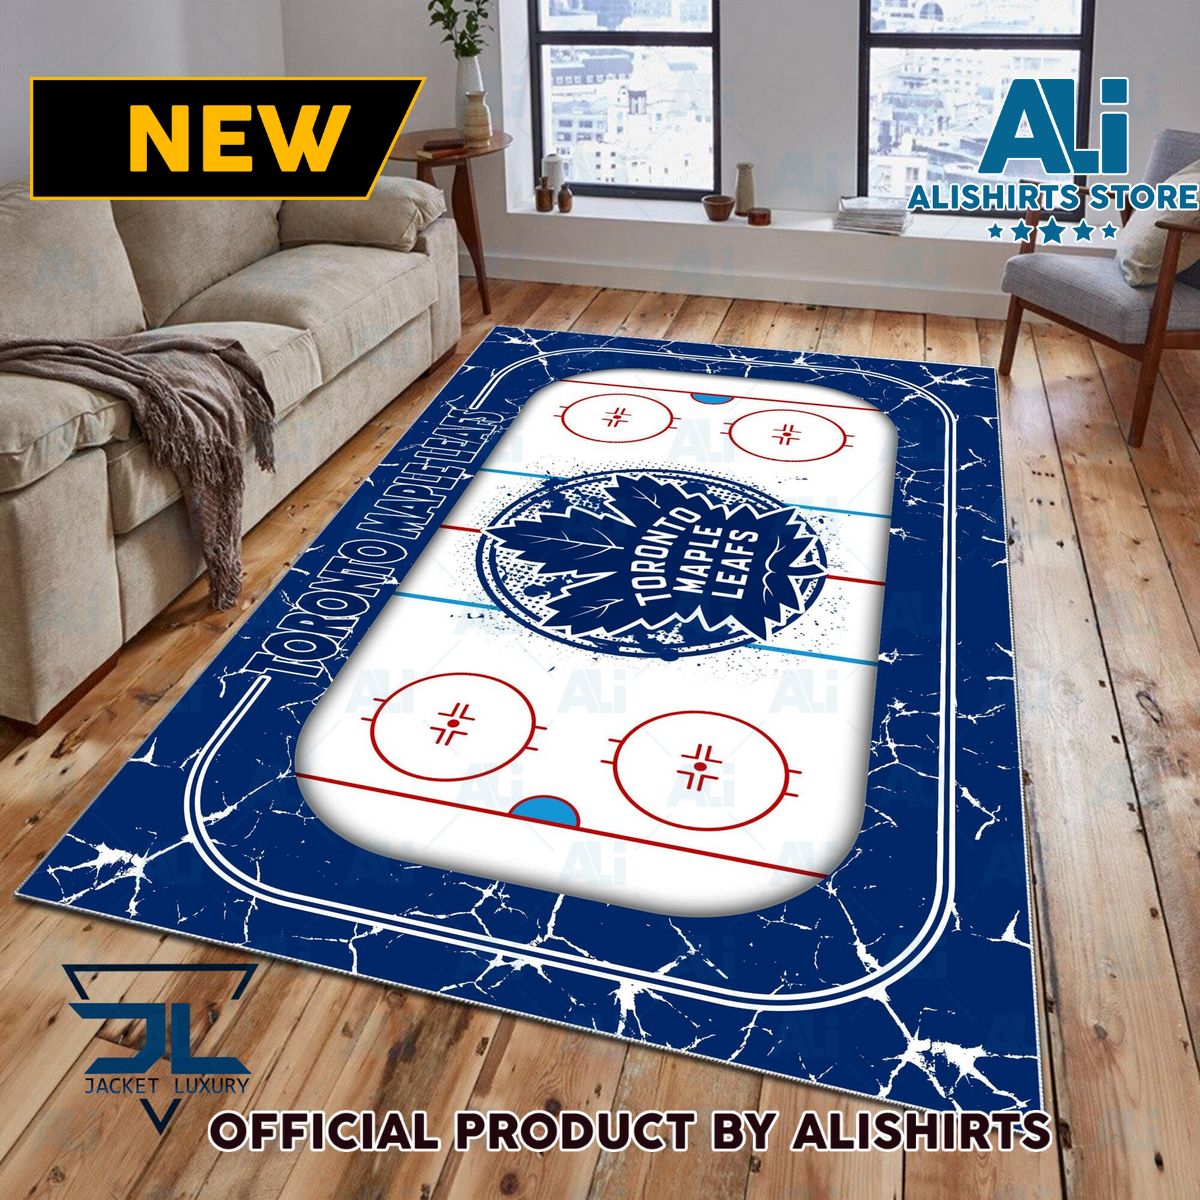 Toronto Maple Leafs NHL team Rug Carpet